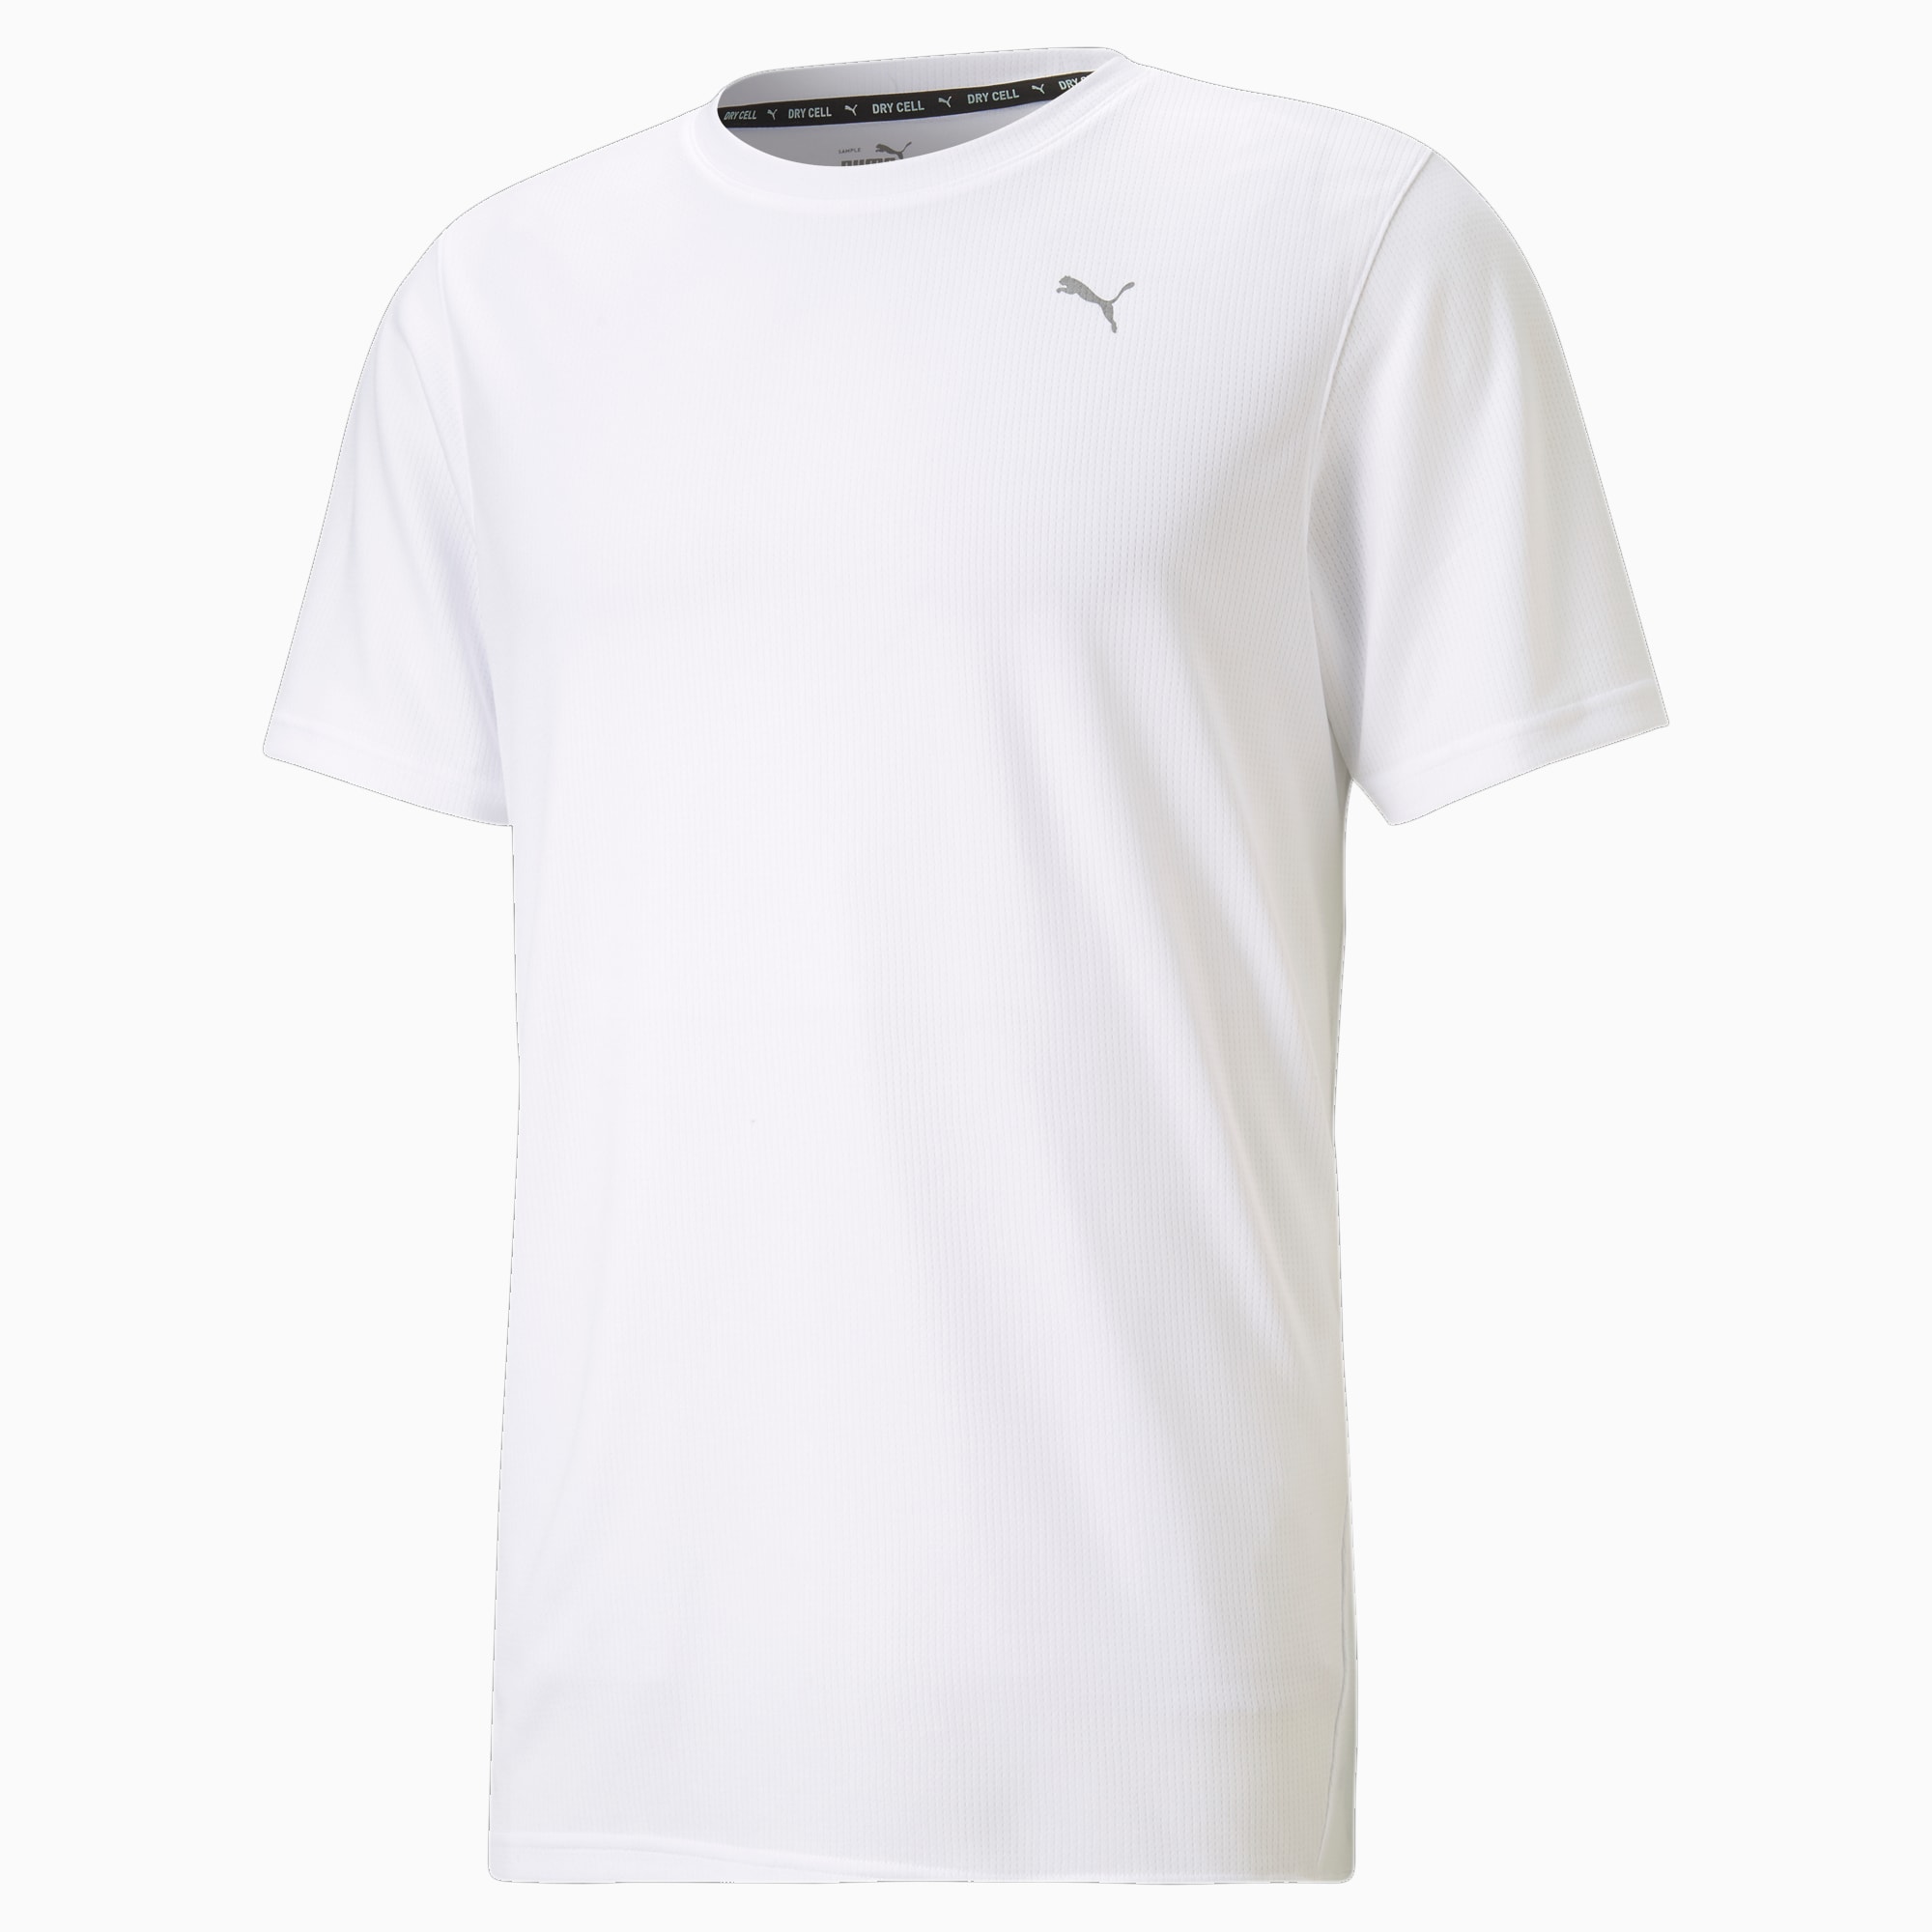 PUMA Performance Short Sleeve Men's Training T-Shirt, White, Size XXL, Clothing